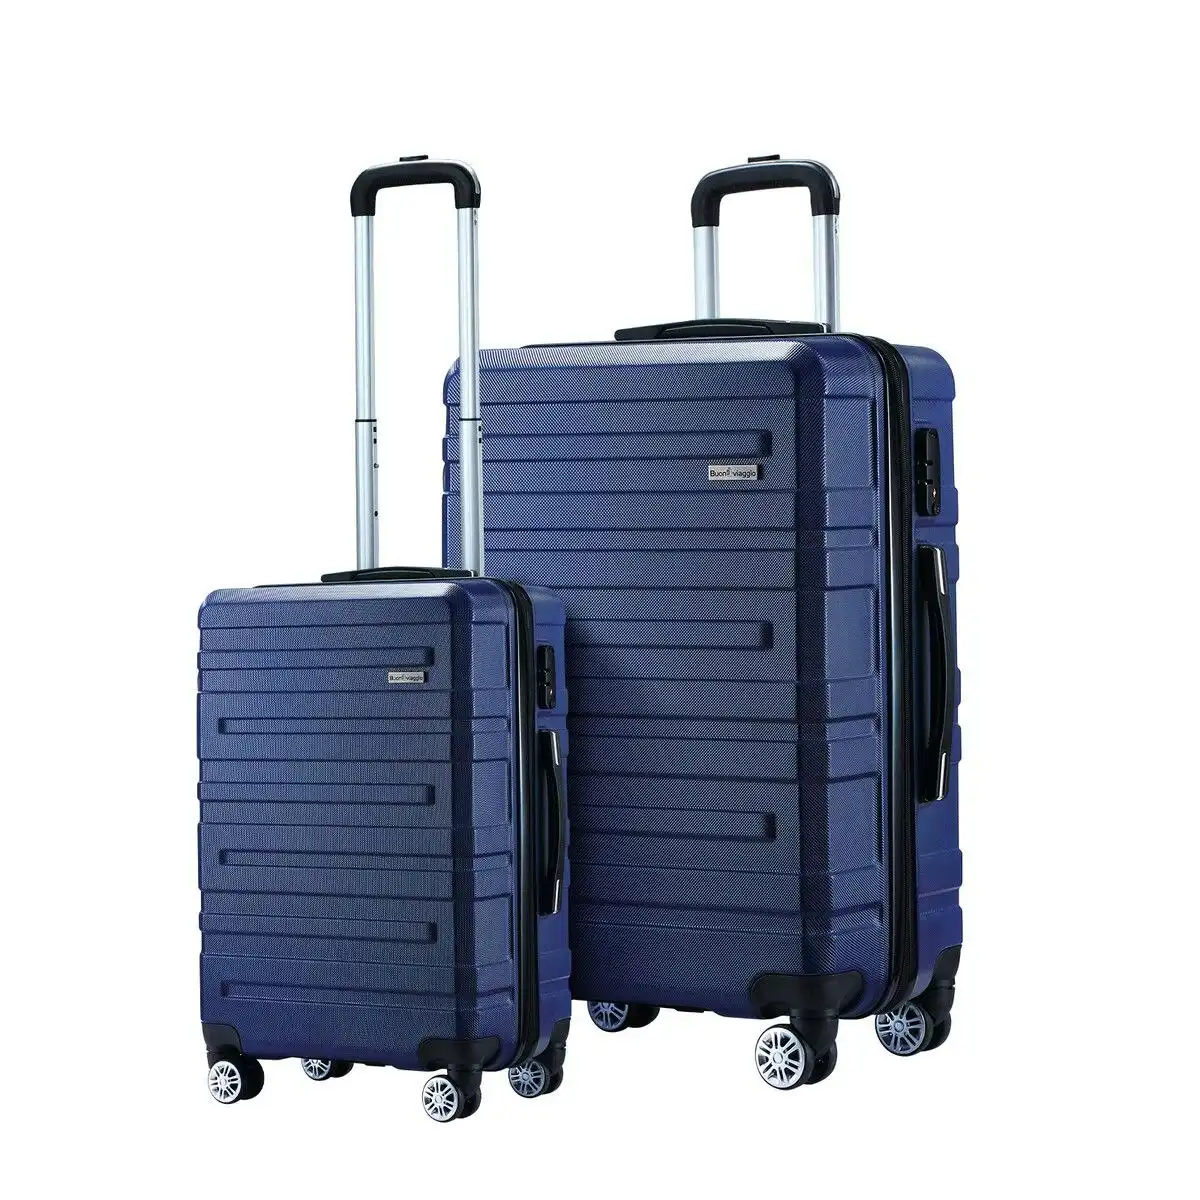 Buon Viaggio 2 Piece Luggage Set Travel Suitcases Carry On Lightweight Hard Trolley TSA Lock Navy Blue